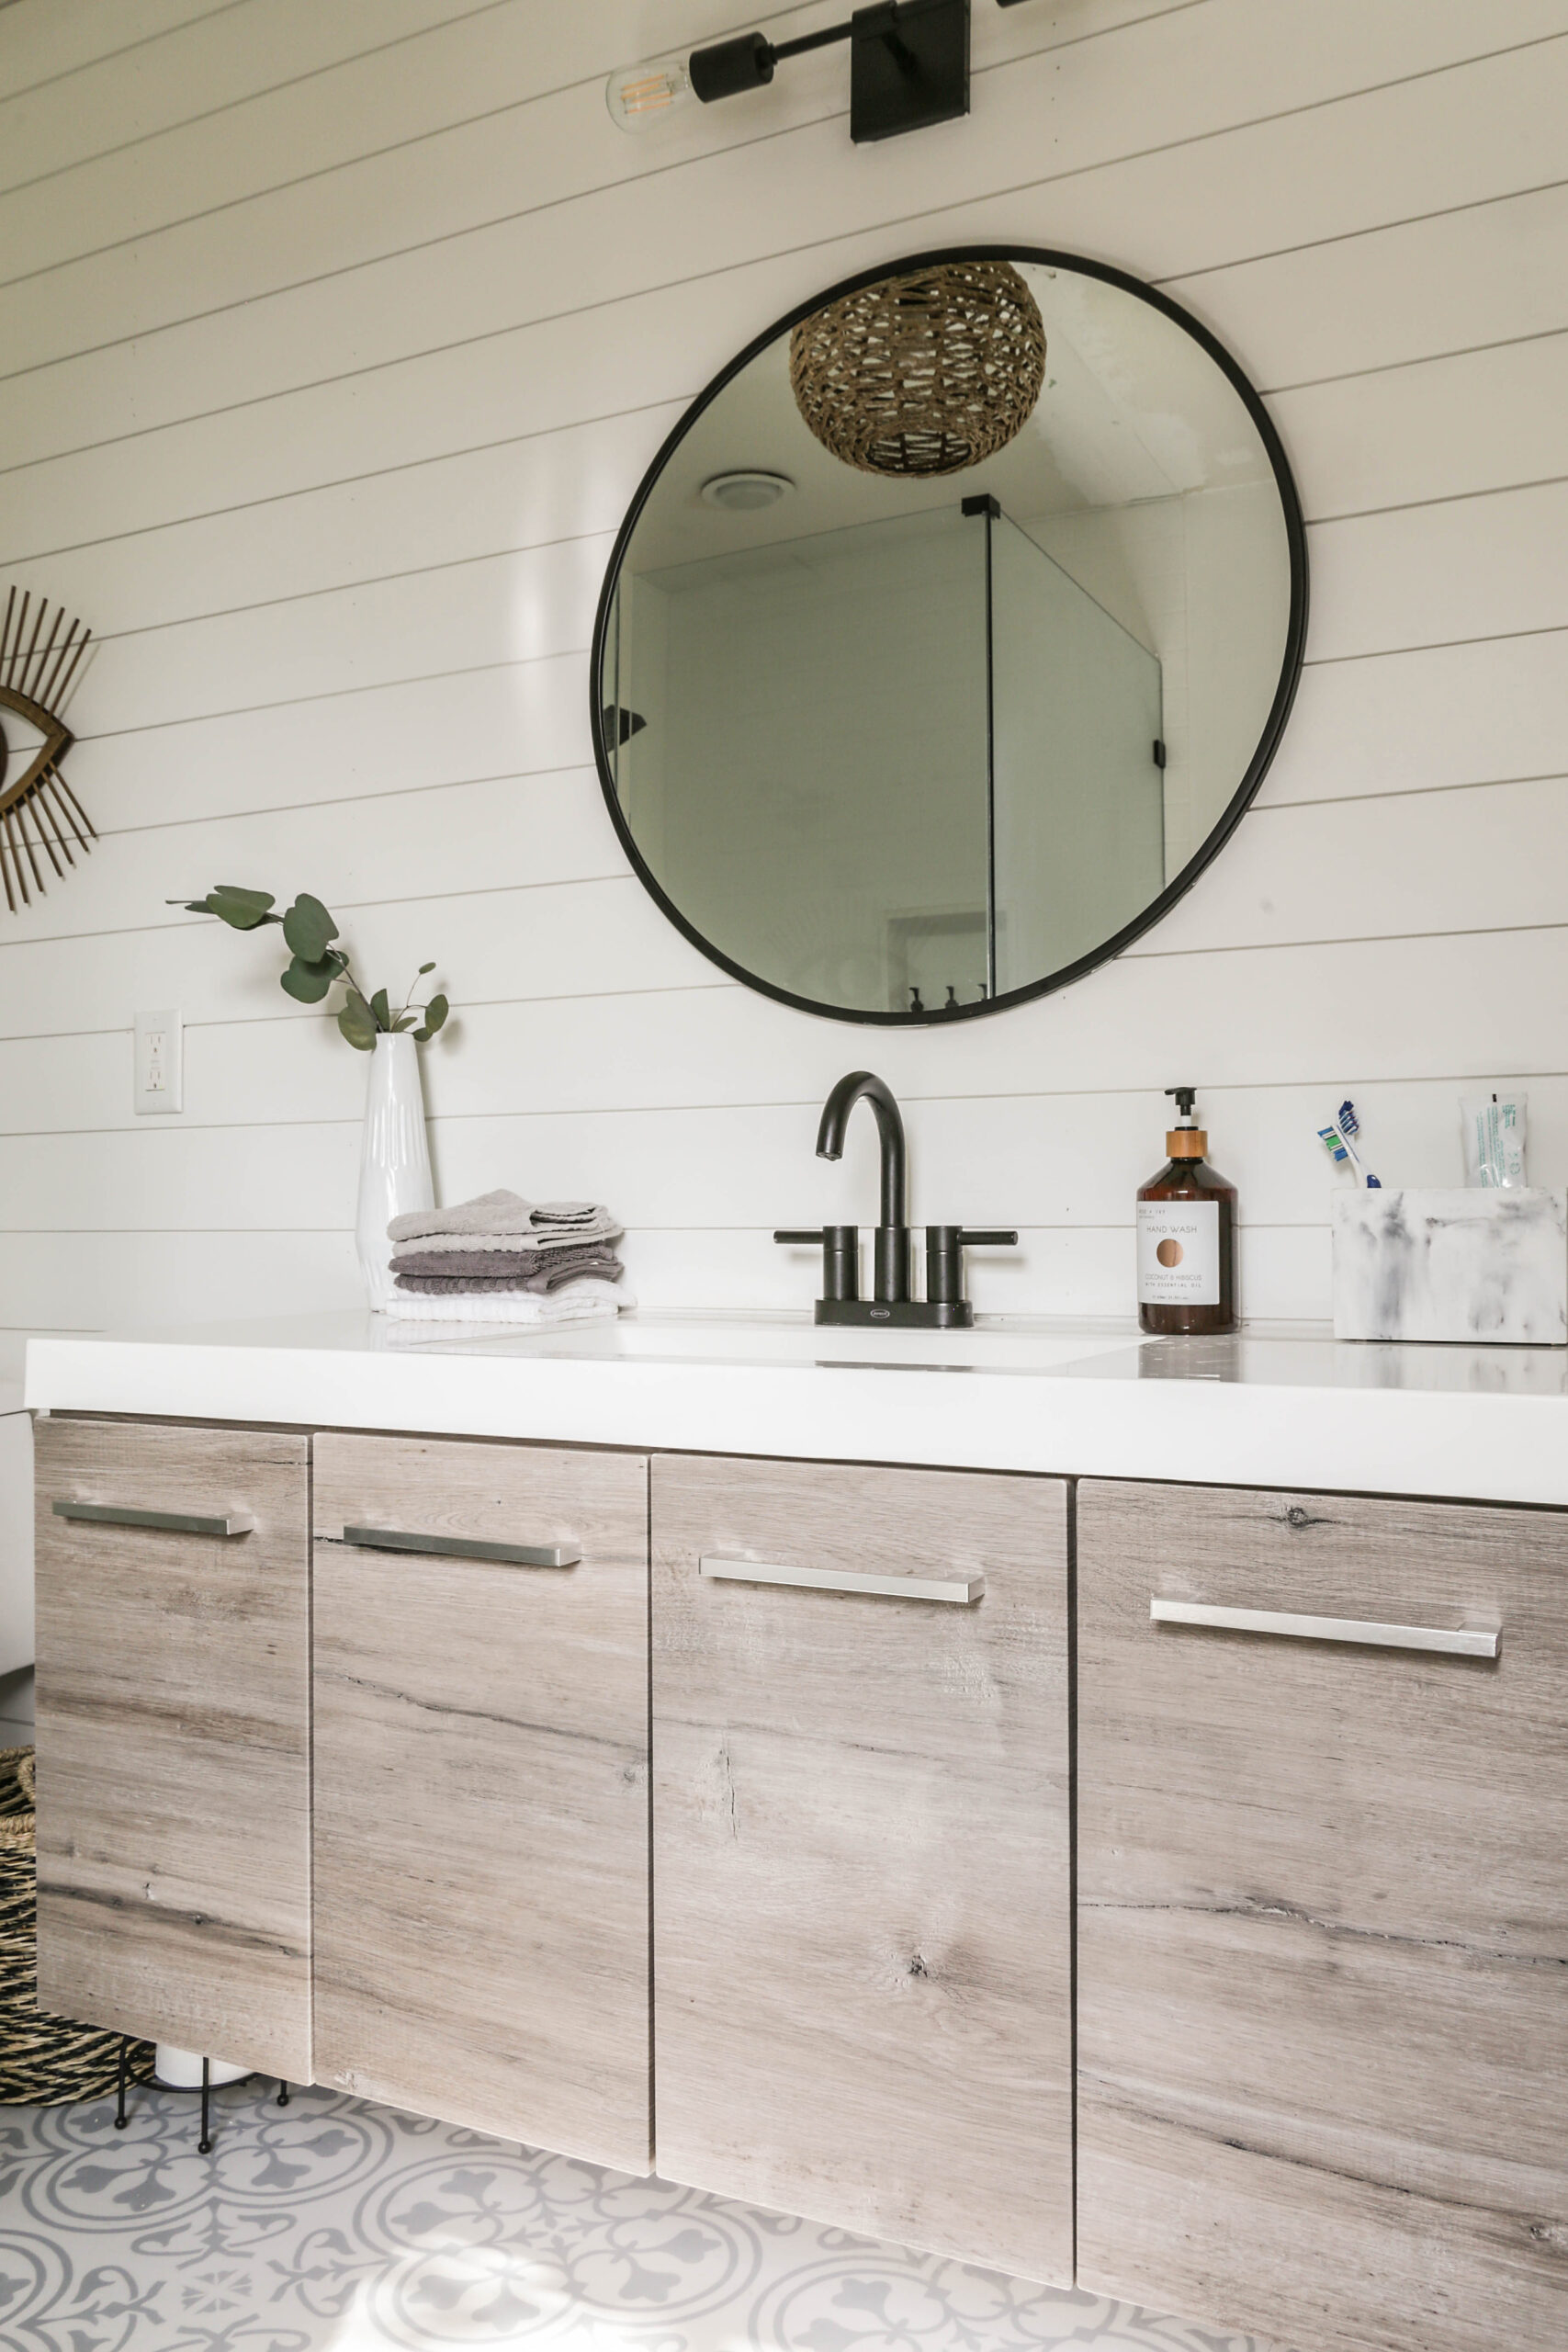 Wall Mounted Modern Bathroom Vanity Roundup: All Under $600